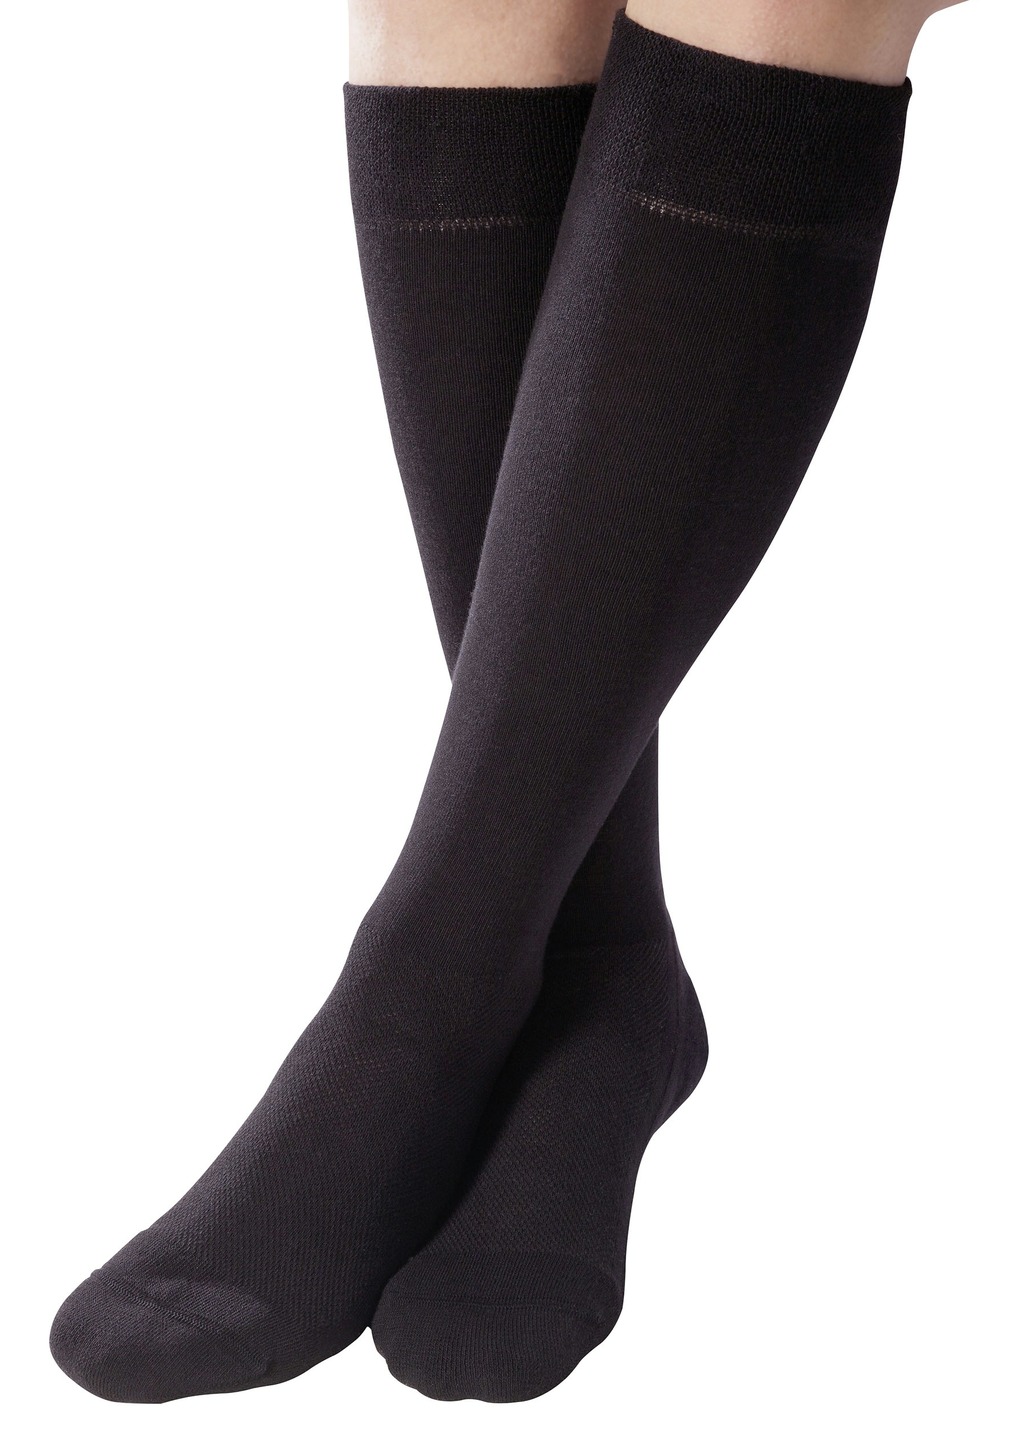 Zweierpack Komfort-Kniestrümpfe oder -Socken - Bekleidung & Strümpfe | BADER